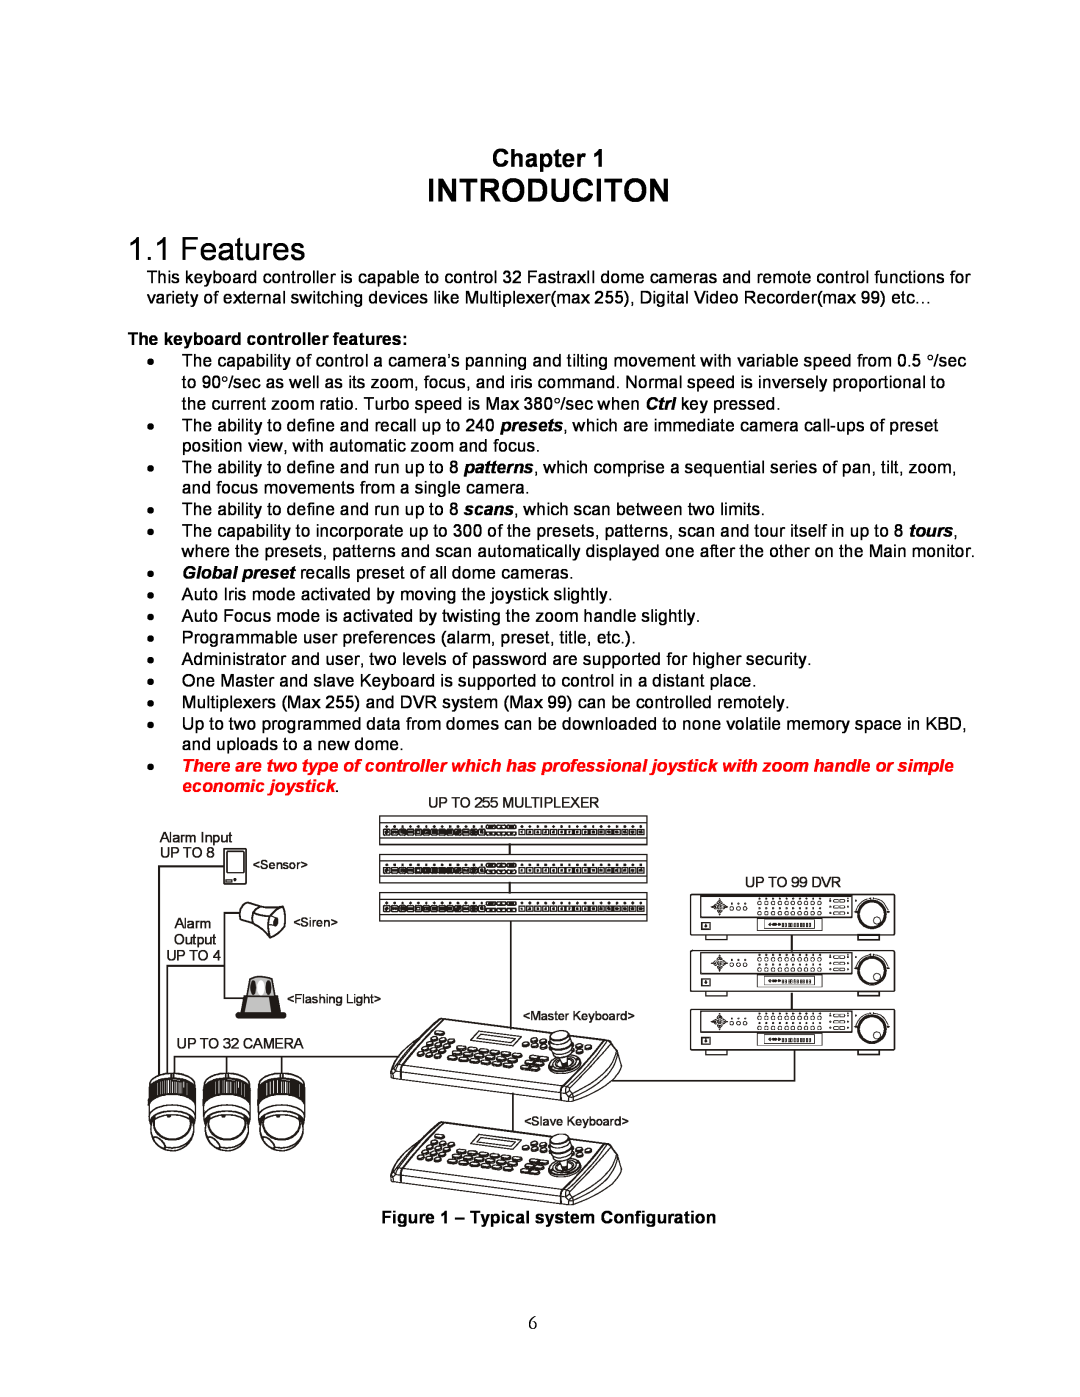 Speco Technologies KBD-927 instruction manual Introduciton, Features, Chapter, economic joystick 